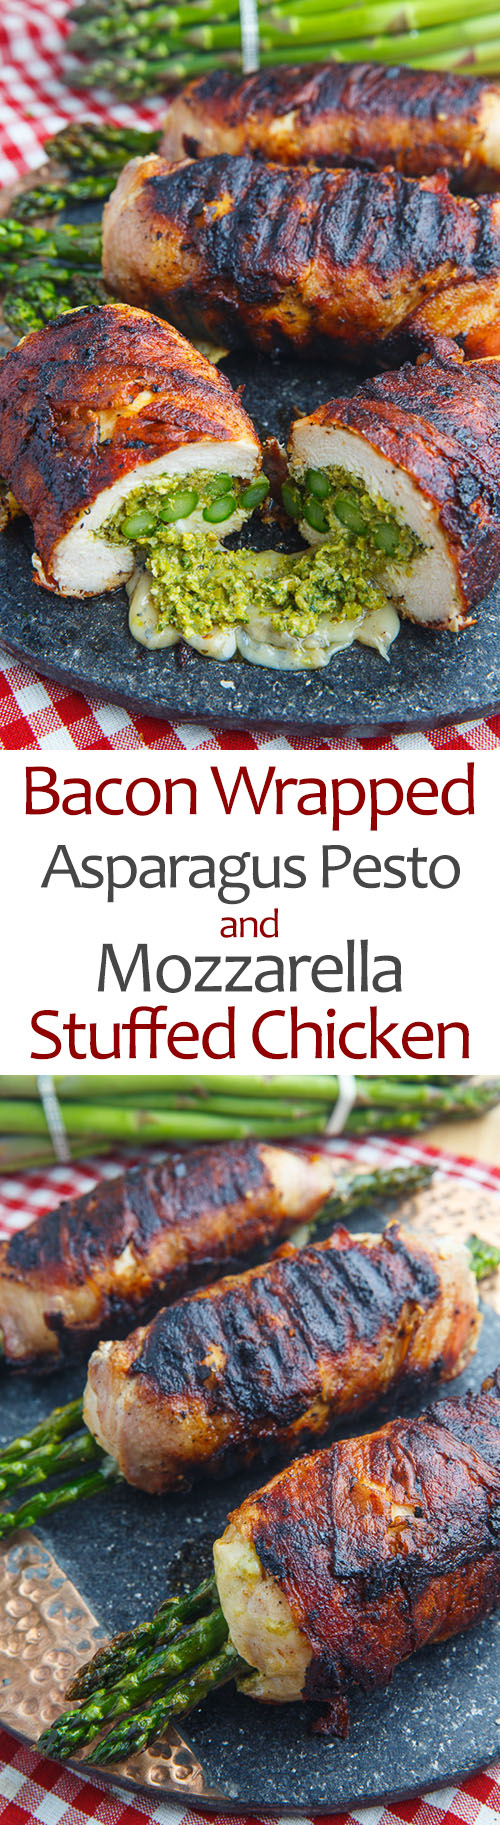 Bacon Wrapped Asparagus, Asparagus and Pistachio Pesto and Mozzarella Stuffed Chicken